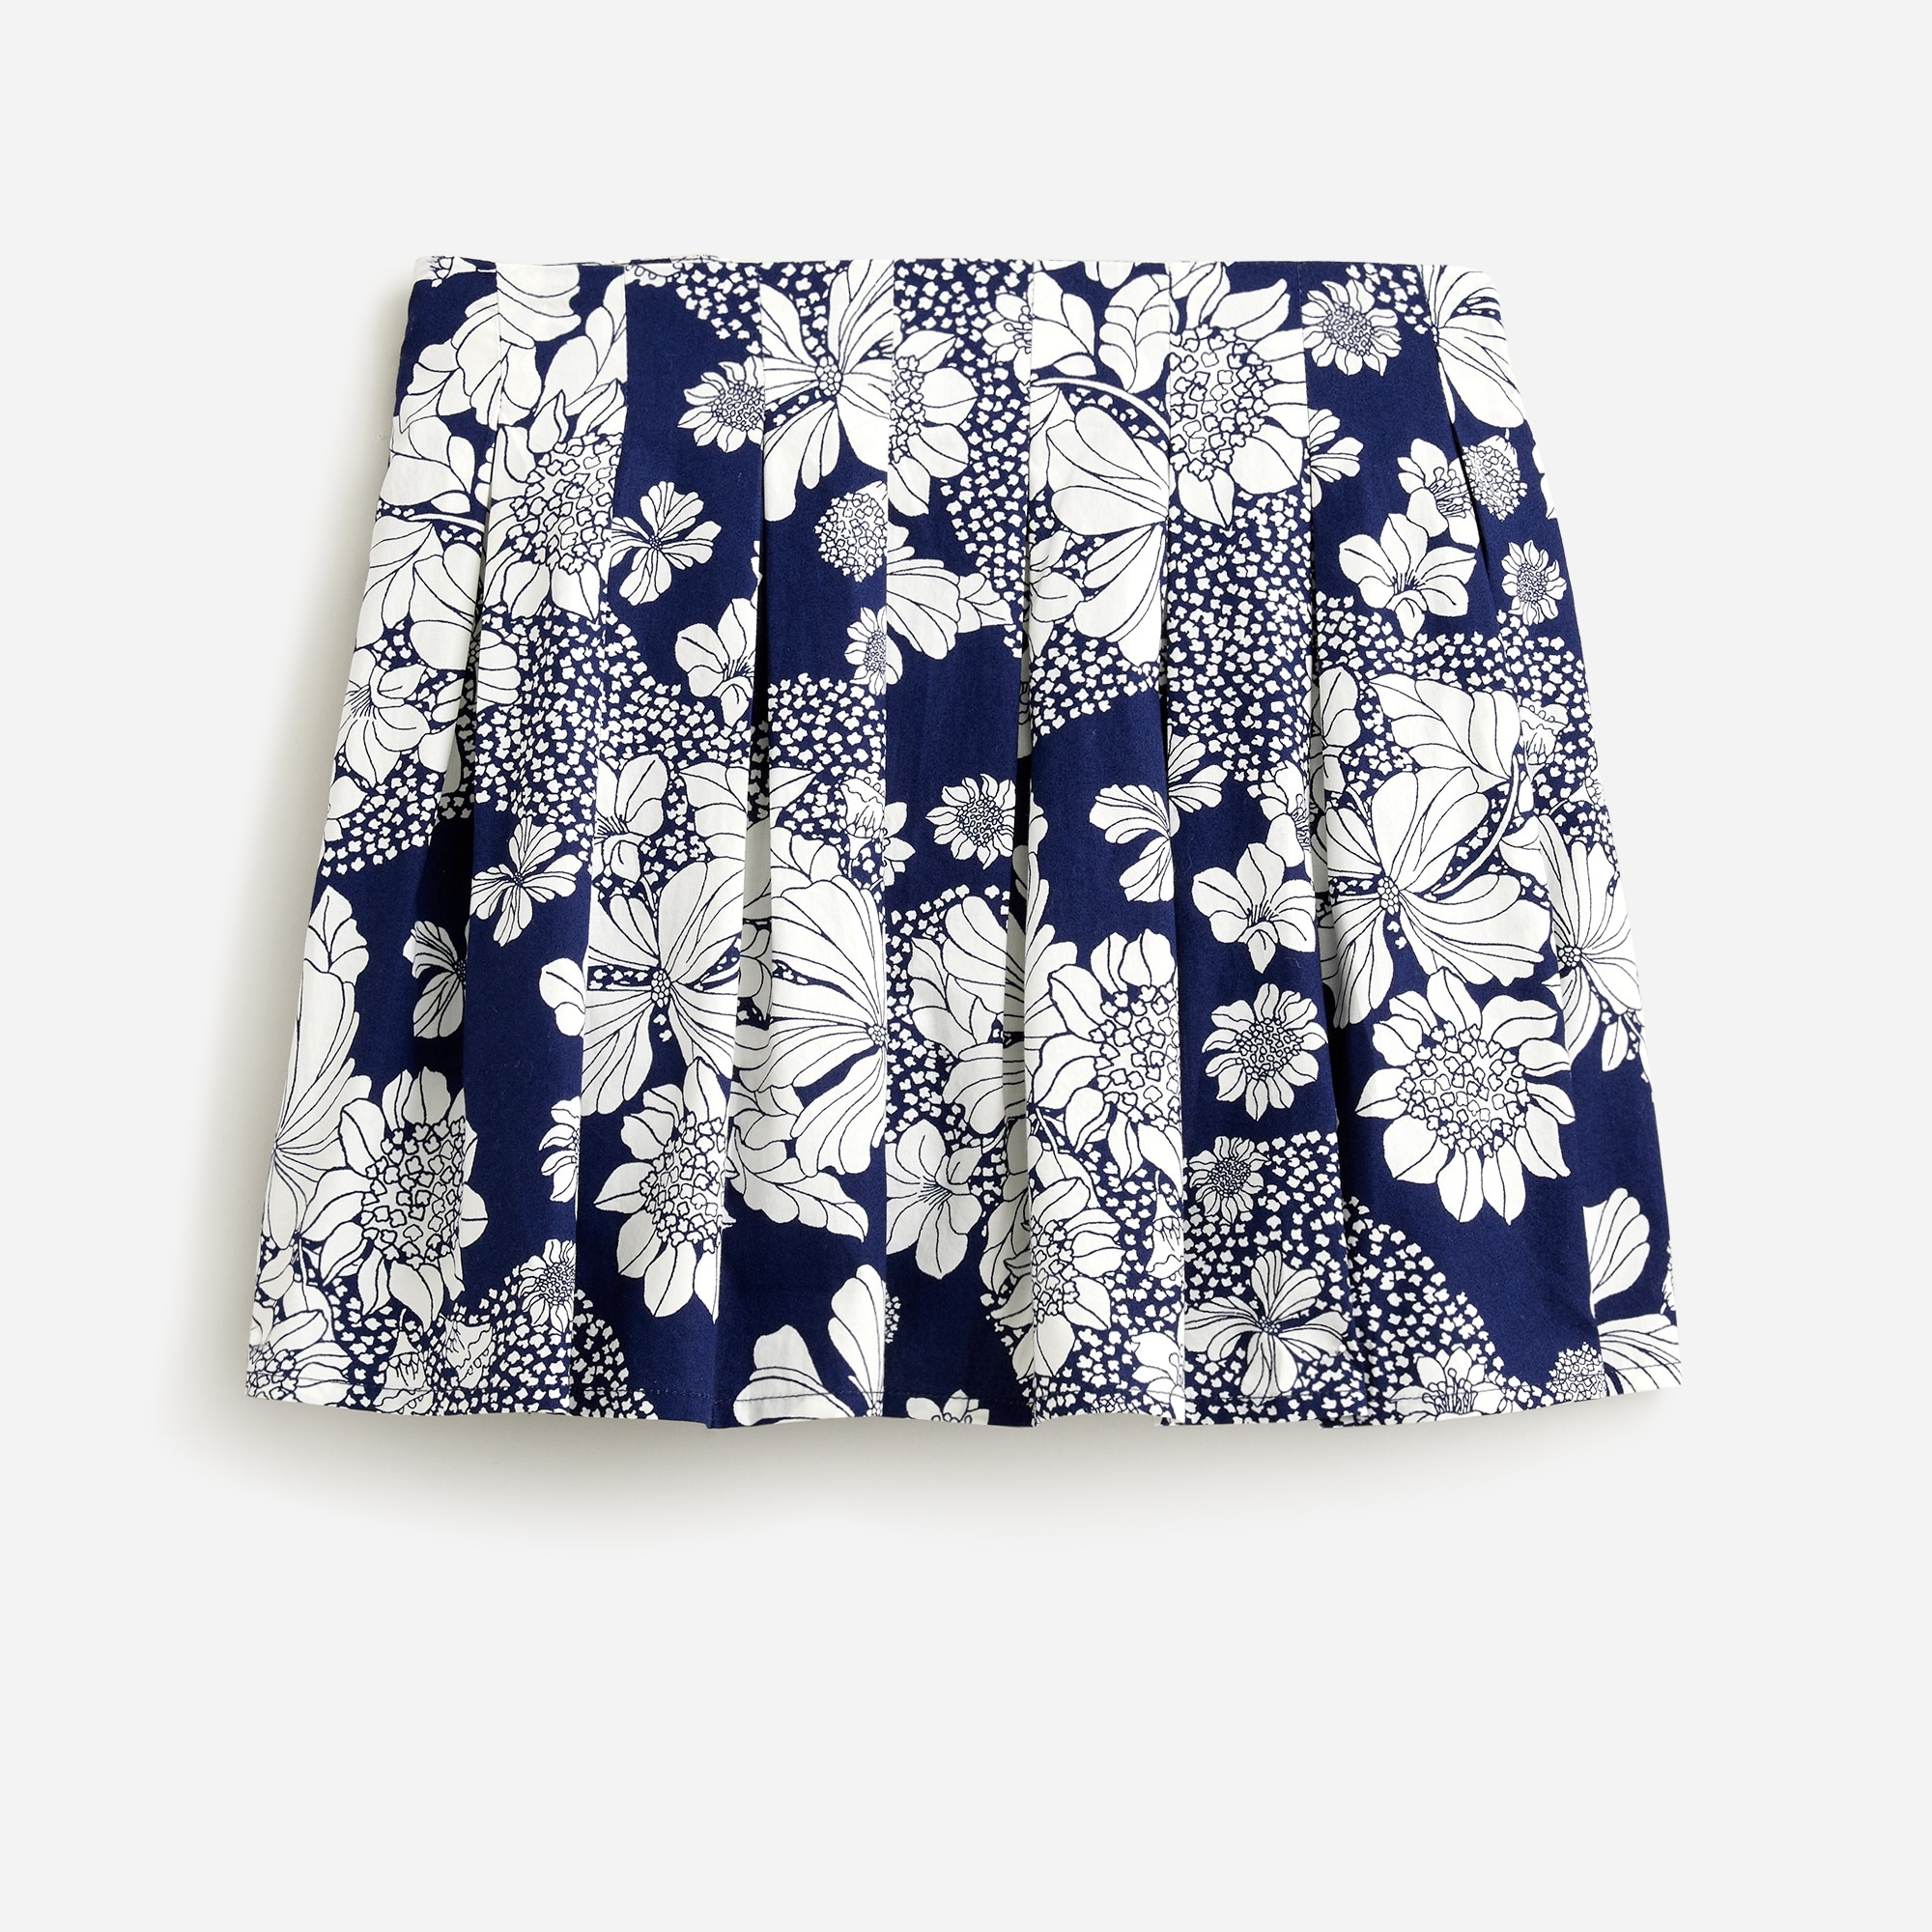  Girls' pleated skirt in indigo floral